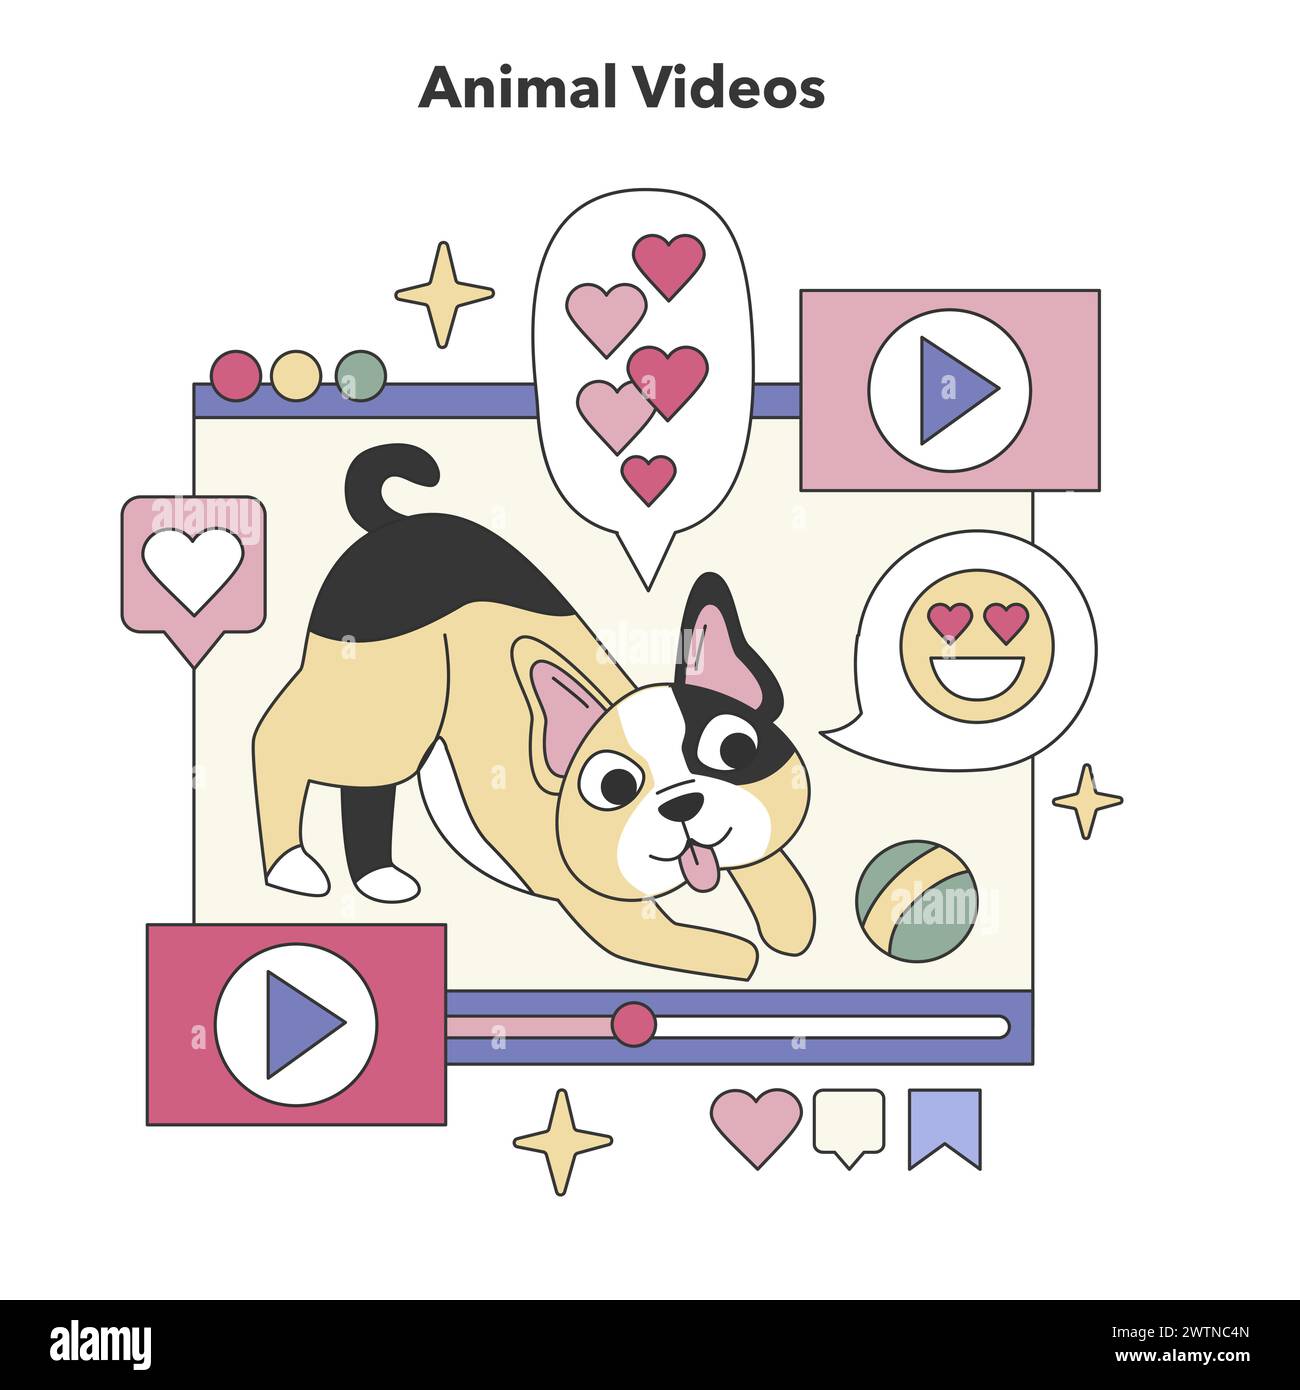 Animal Videos theme. Captivating pet antics and heartwarming animal clips on social platforms. Pet lovers' joy, wildlife appreciation, engaging content. Flat vector illustration Stock Vector